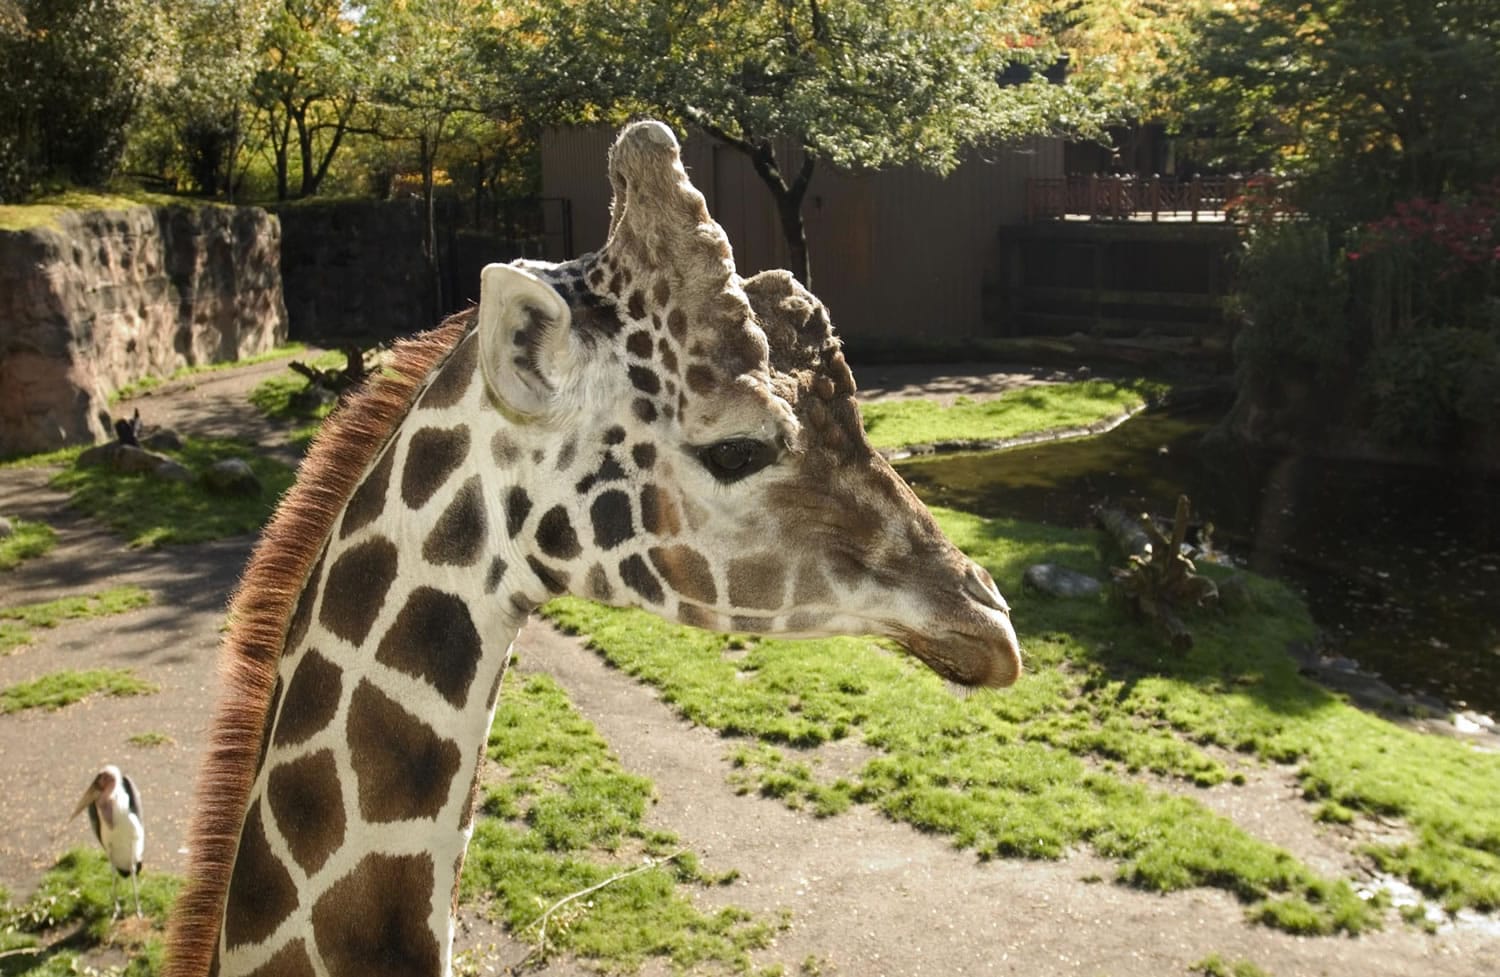 Akeem the giraffe at home in the Oregon Zoo's Africa Savanna exhibit.